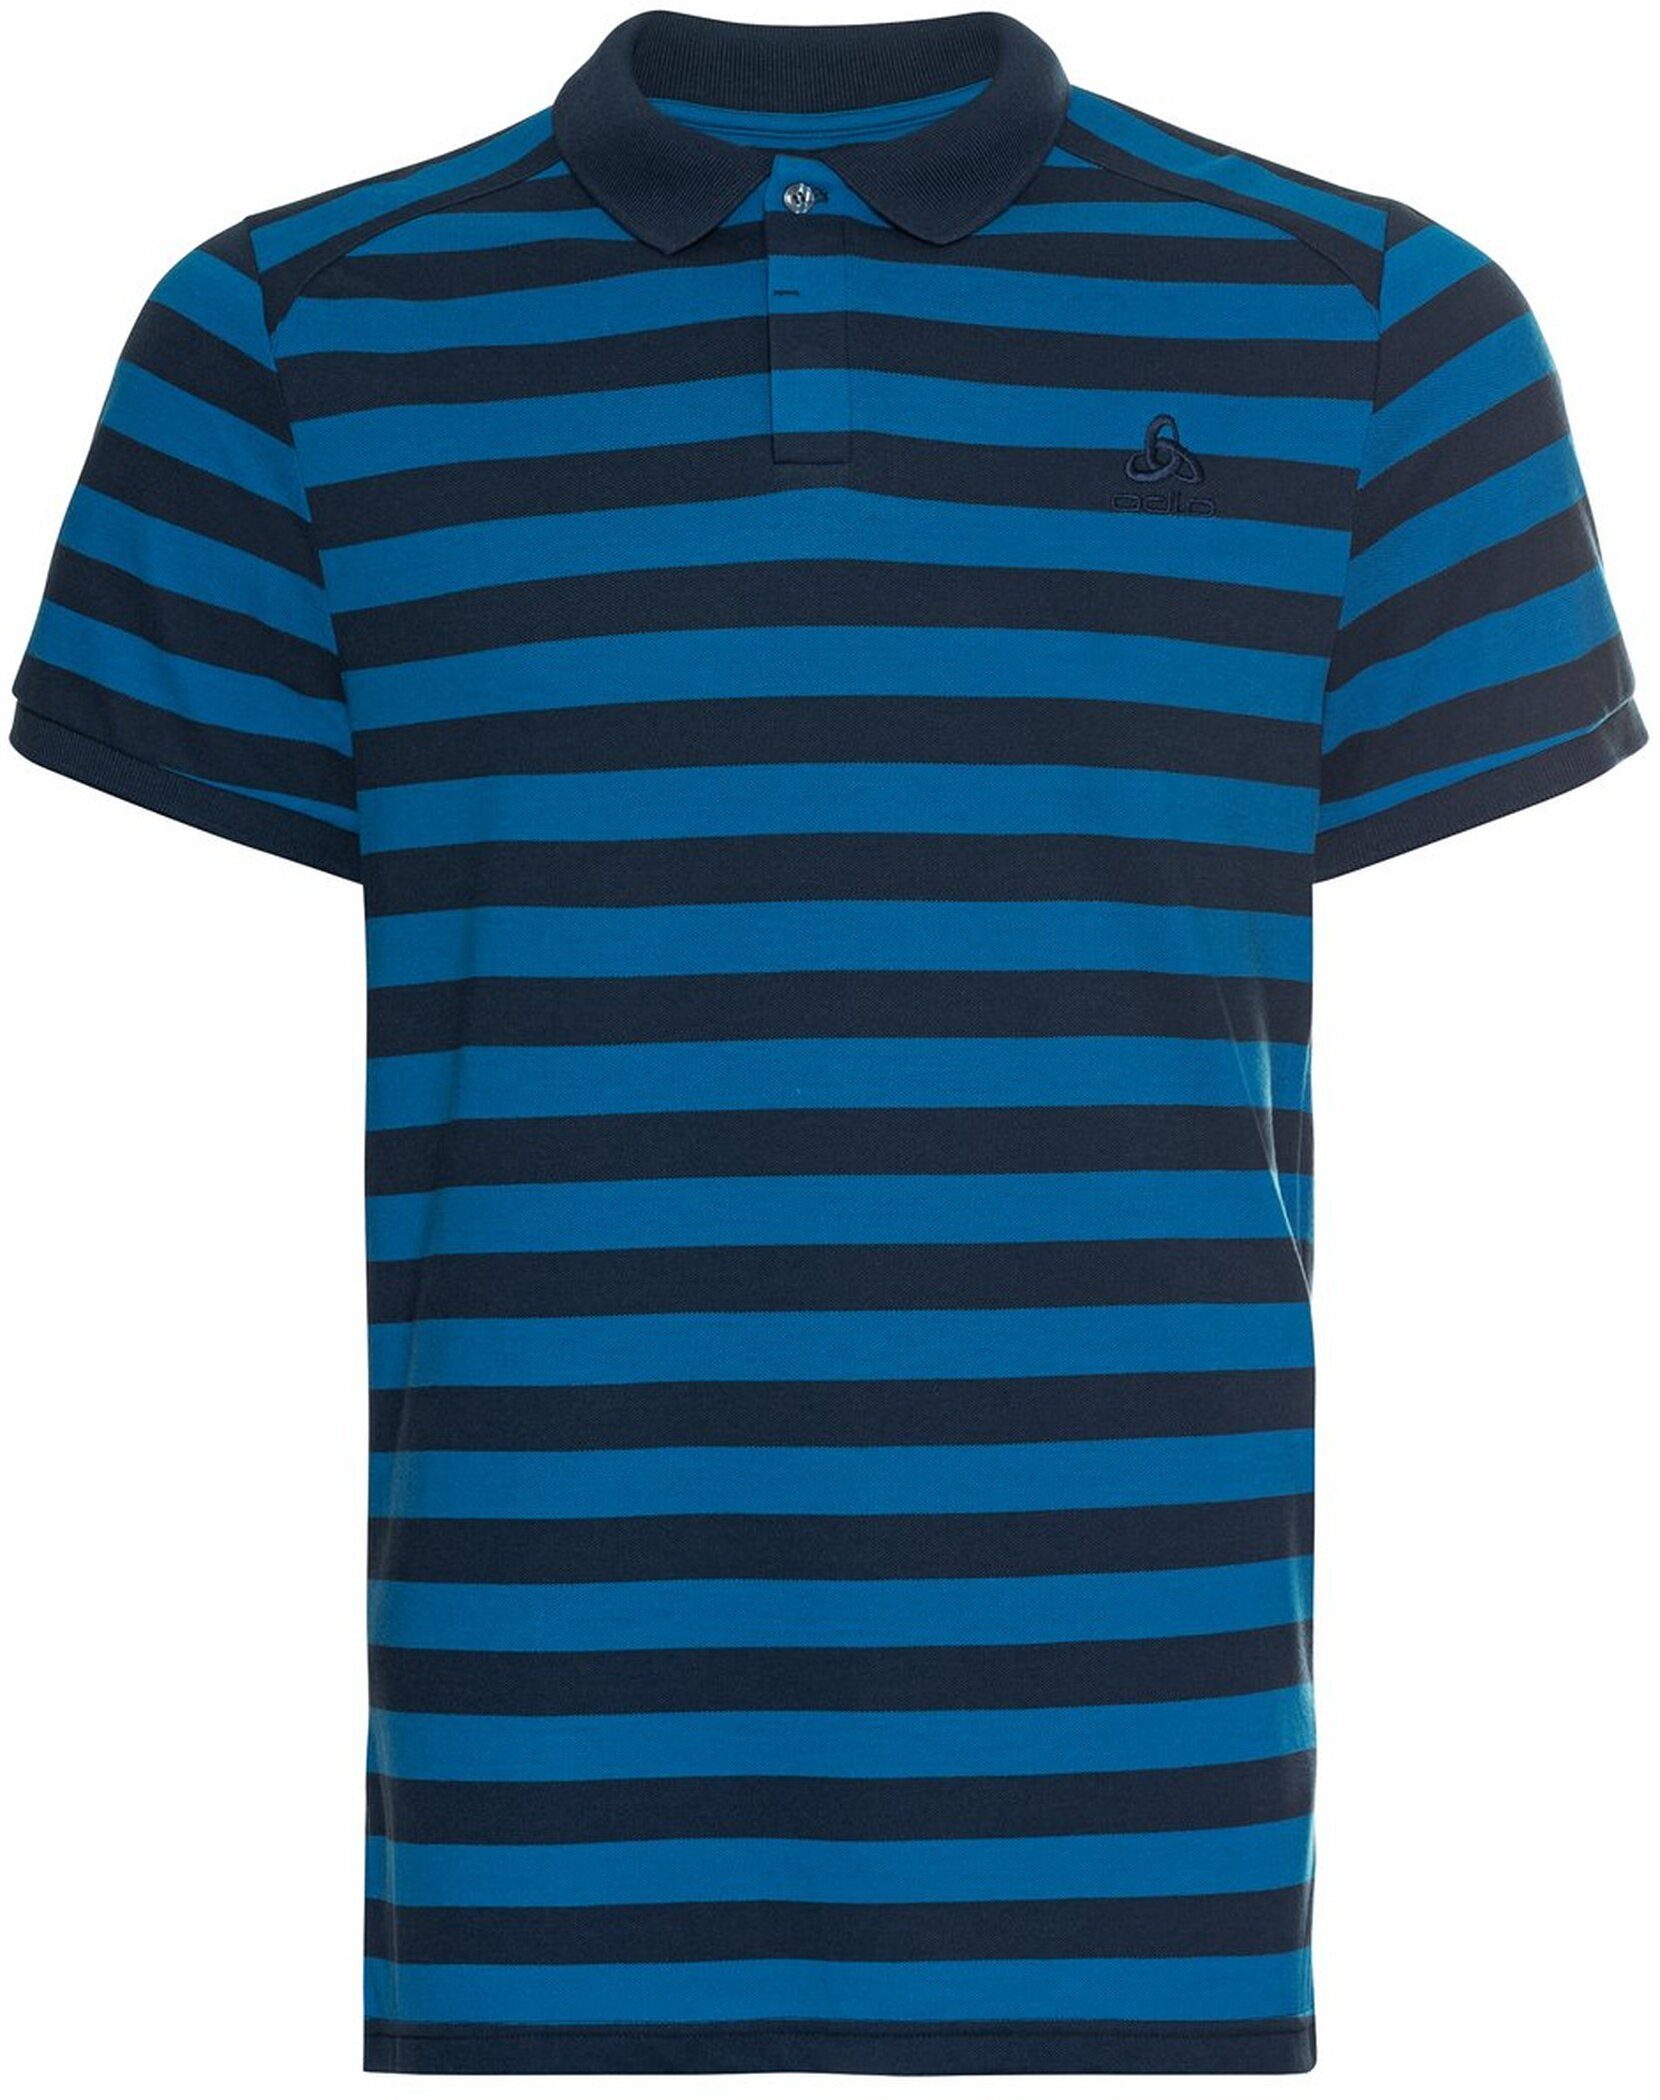 s/s indigo CONCORD bunting 20879 Poloshirt blue Polo wi shirt - Odlo